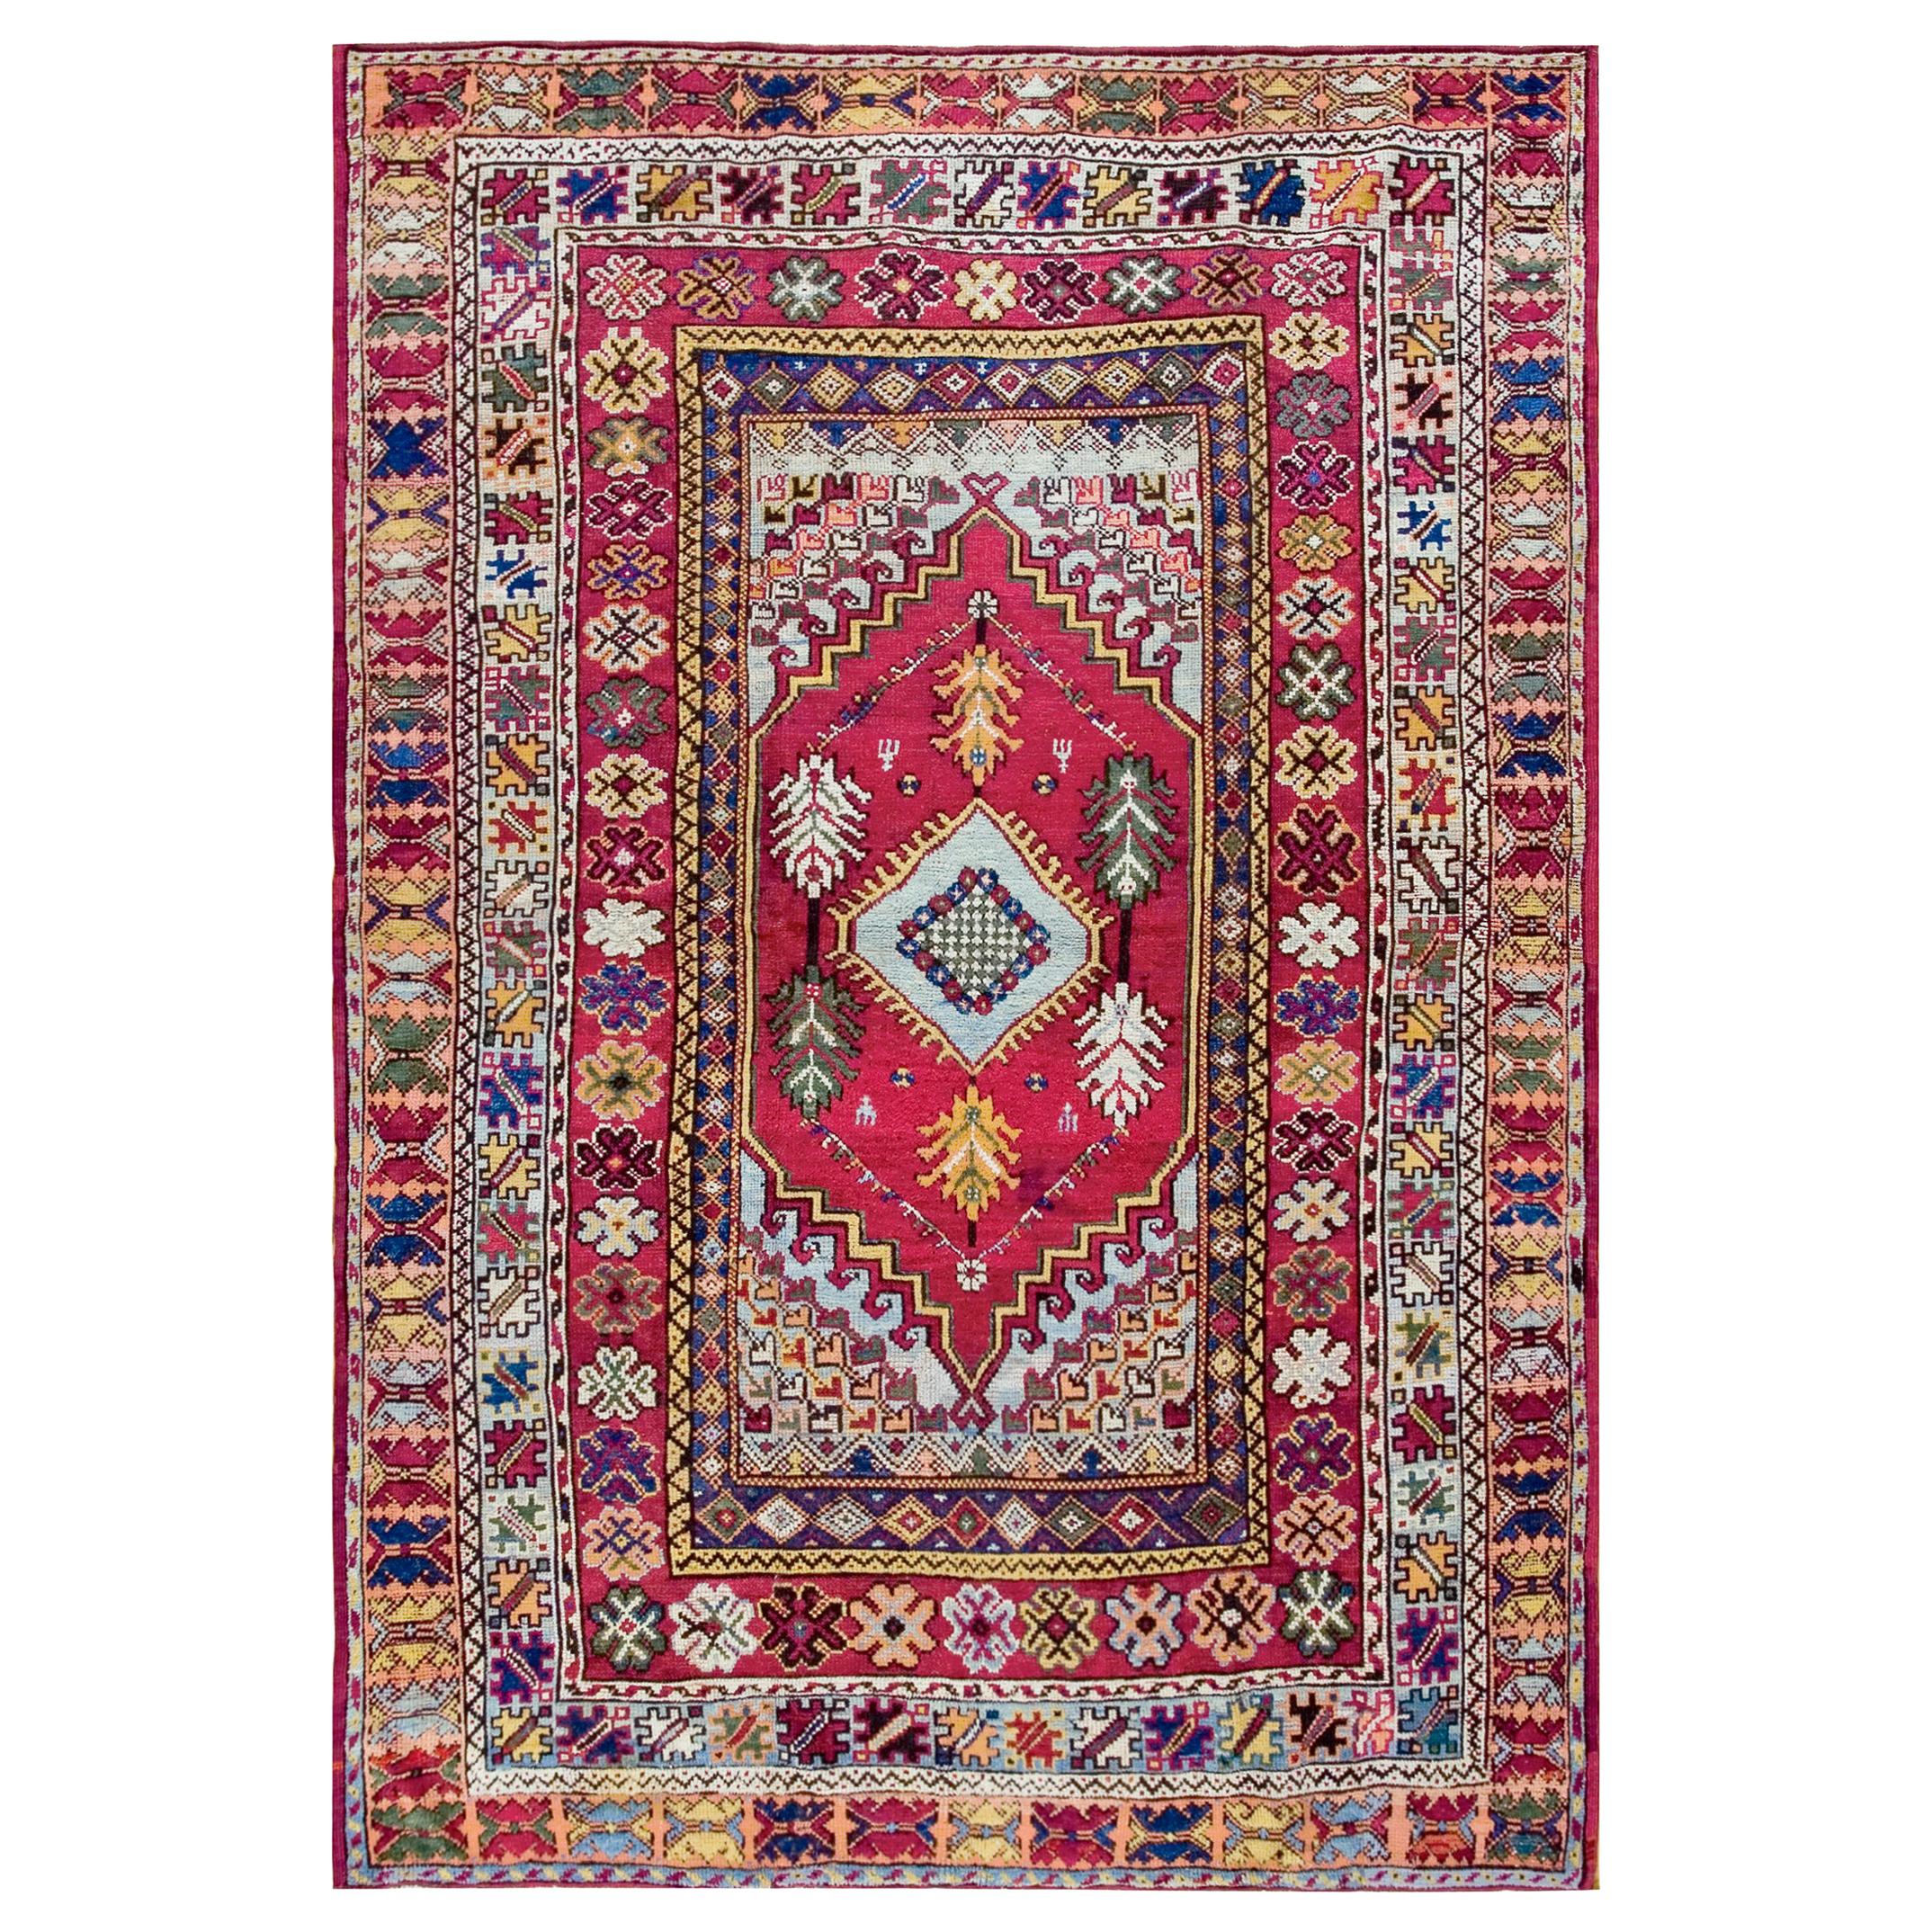 Late 19th Century Moroccan Rabat Carpet ( 6'8" x 9'6" - 203 x 290 )